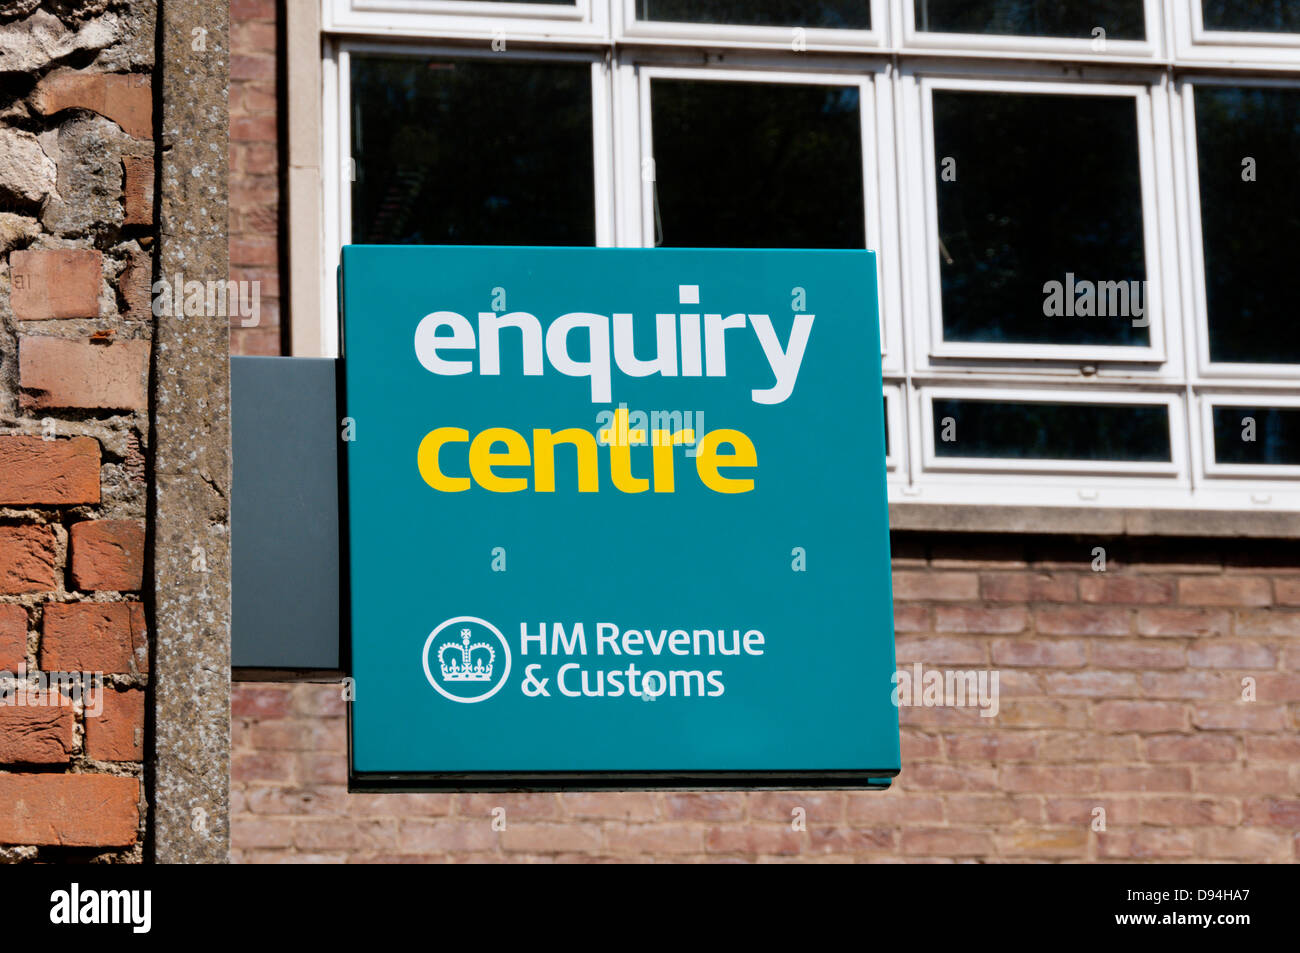 hm-revenue-customs-enquiry-centre-stock-photo-alamy